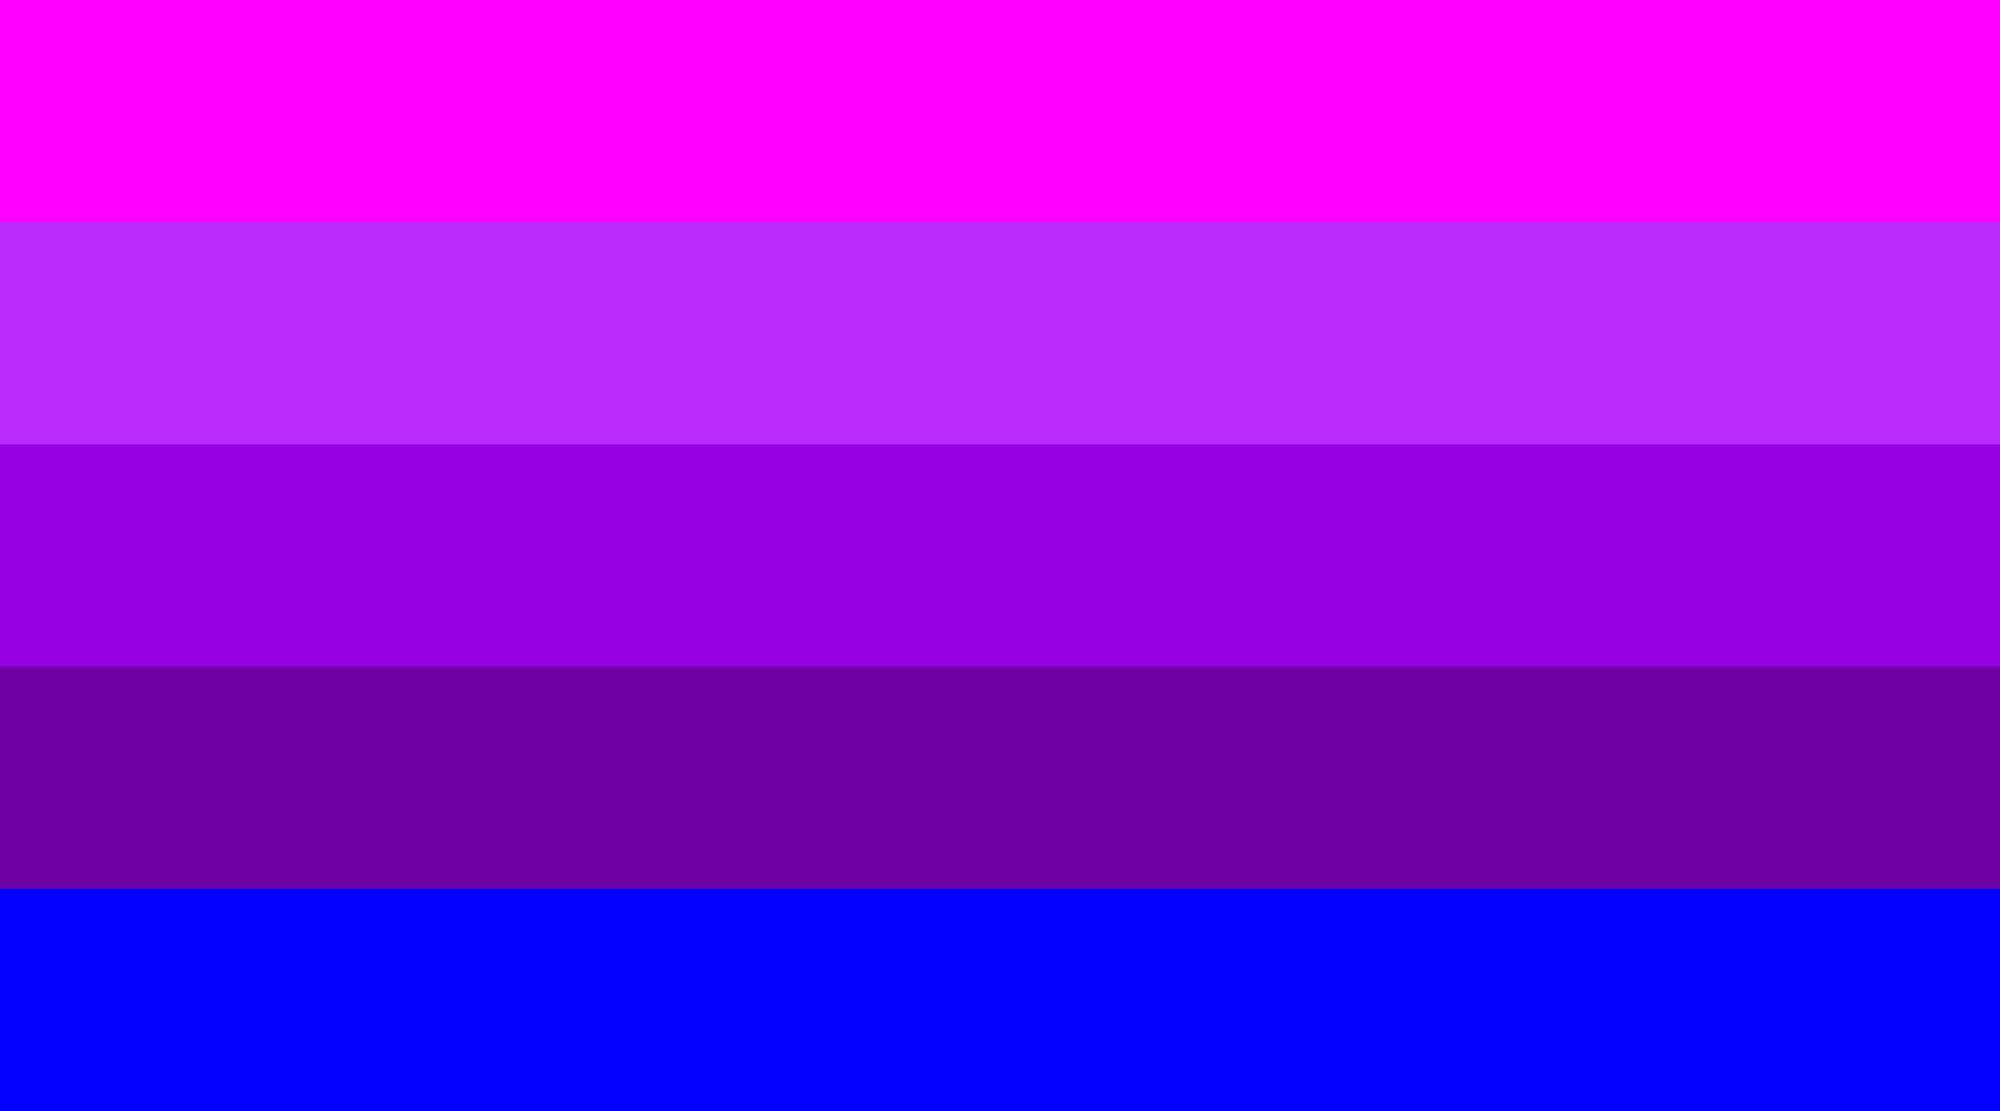 trans and gay flag wallpaper